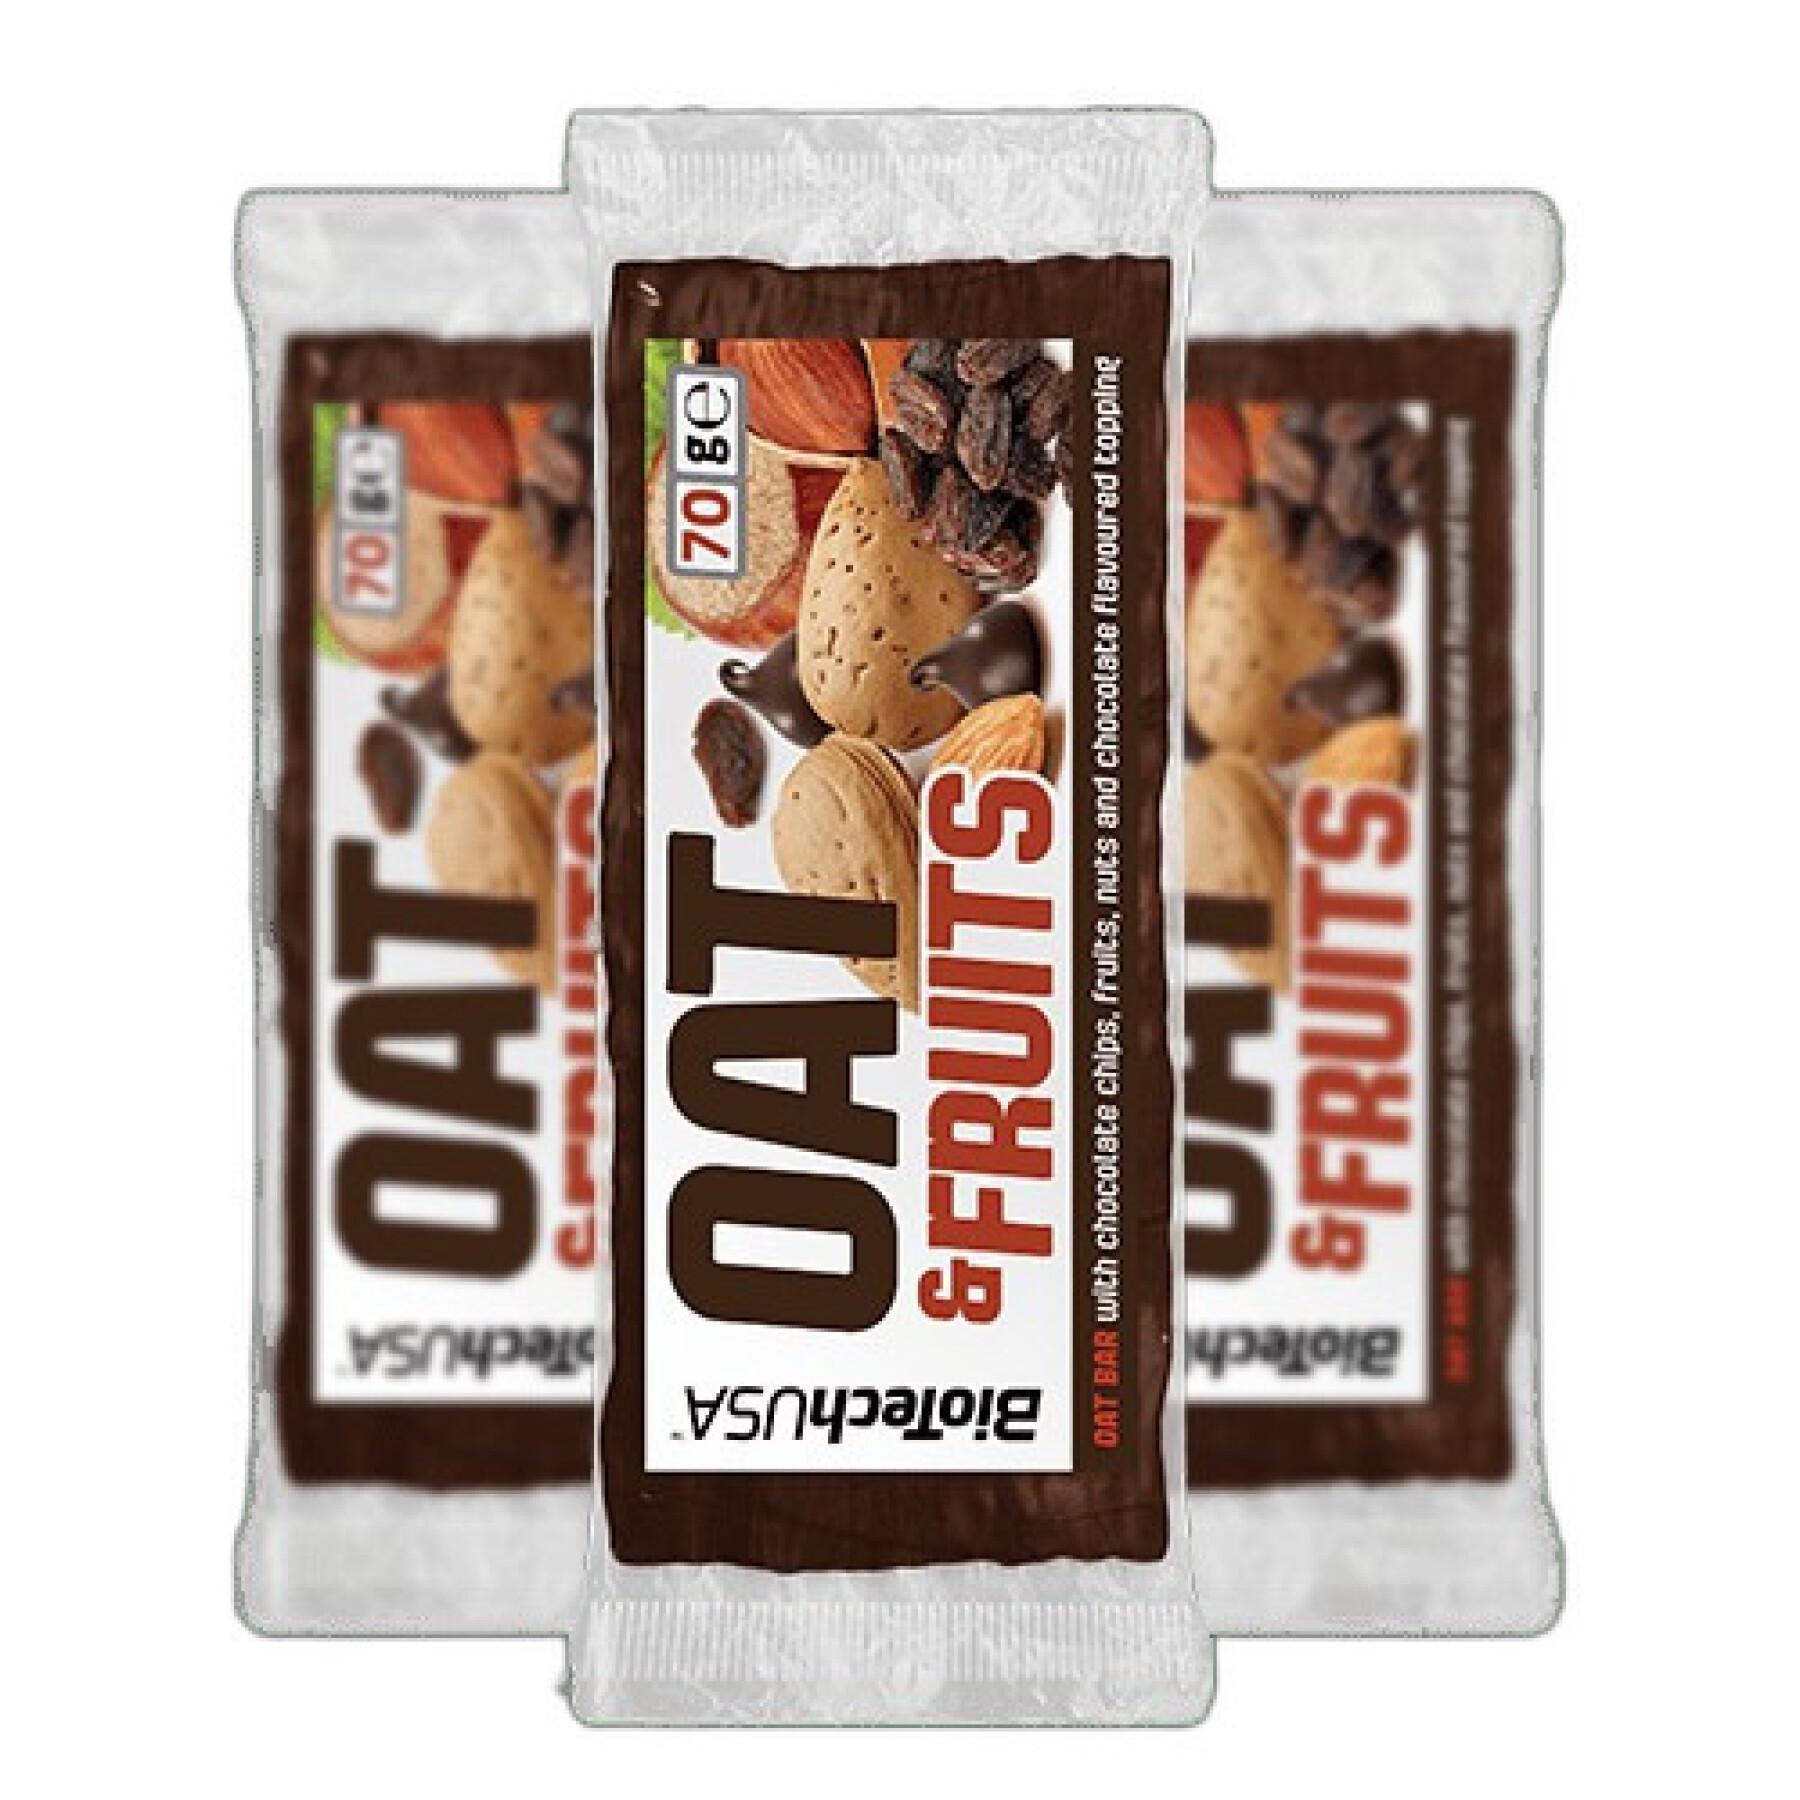 Pack of 20 cartons of oat bar snacks Biotech USA - Noix de pecan